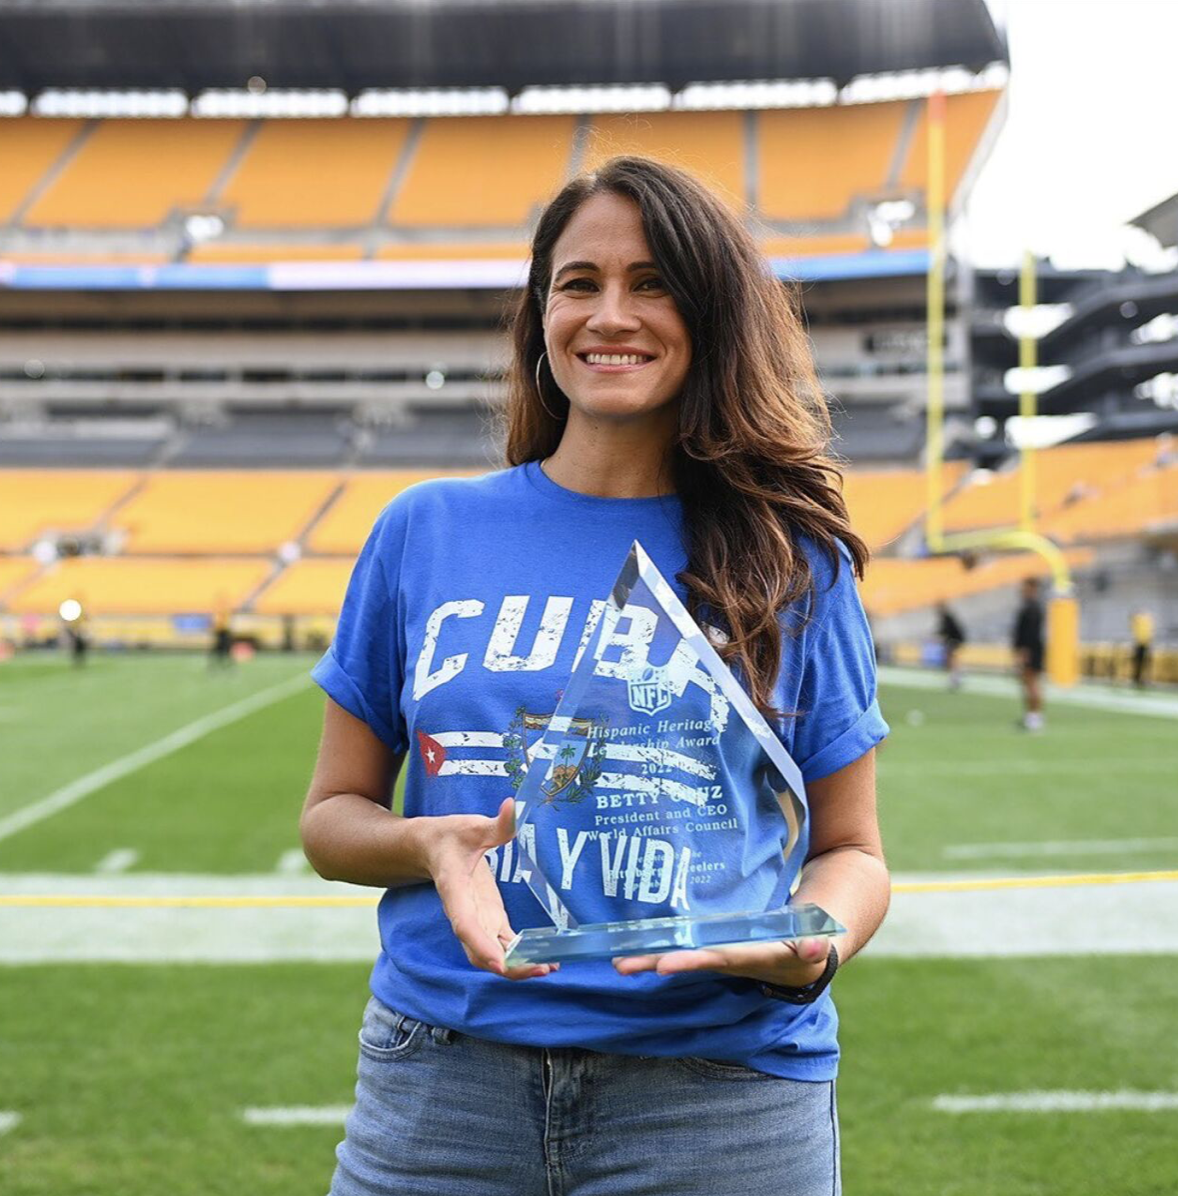 The Steelers present the Hispanic Heritage Leadership Award to Betty Cruz